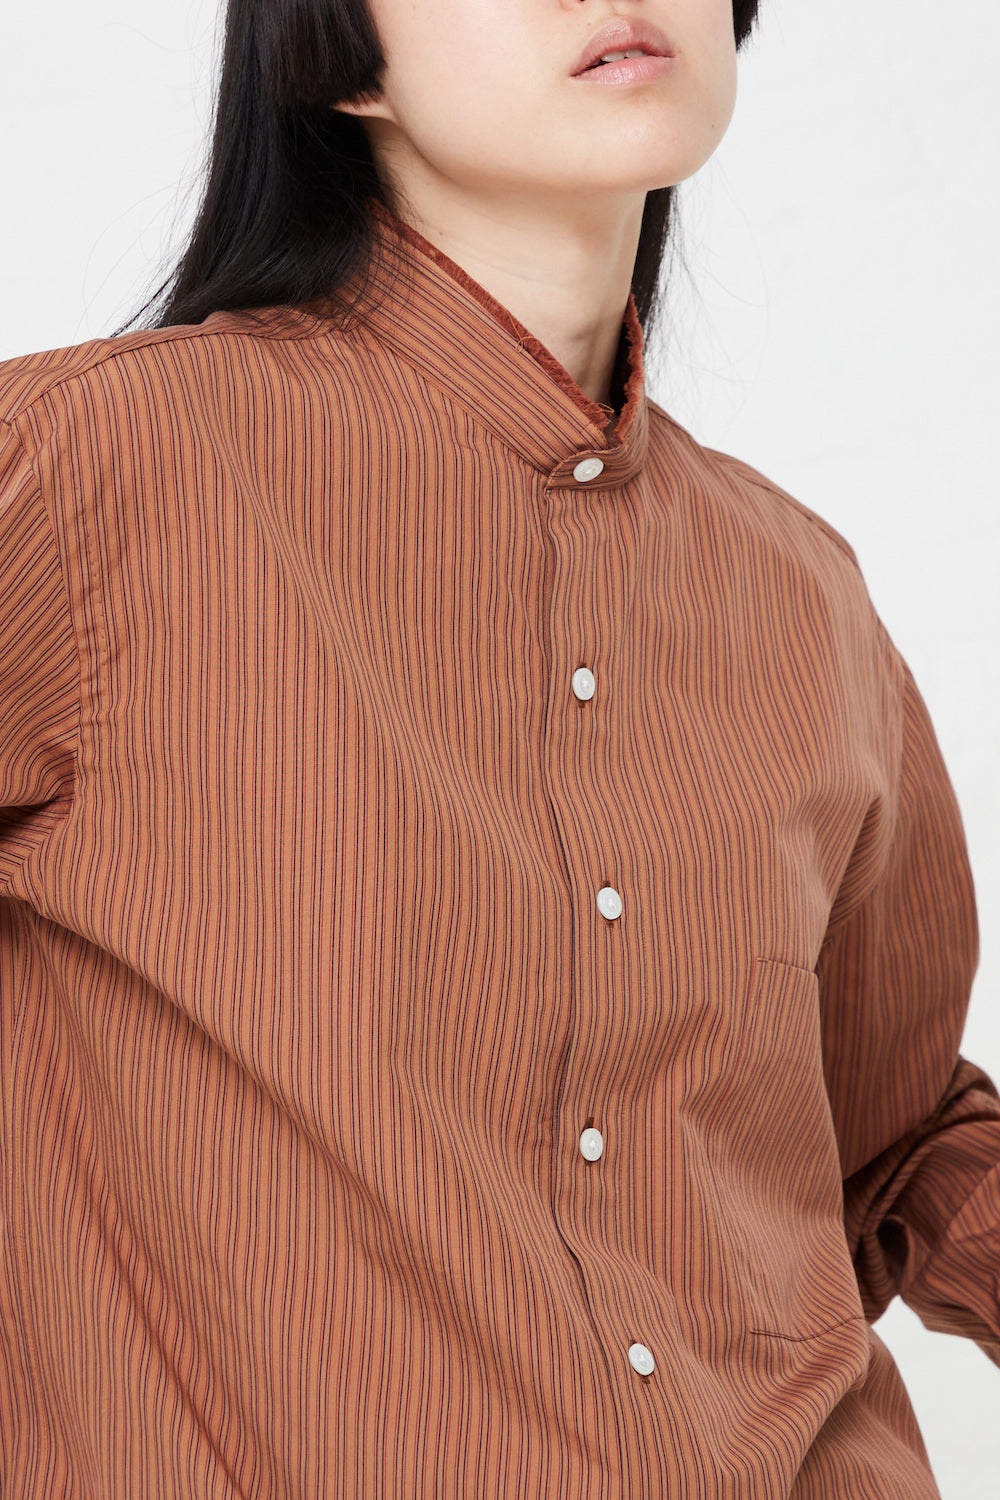 Handmade Mao Shirt with Fringed Collar in Noisette Stripes